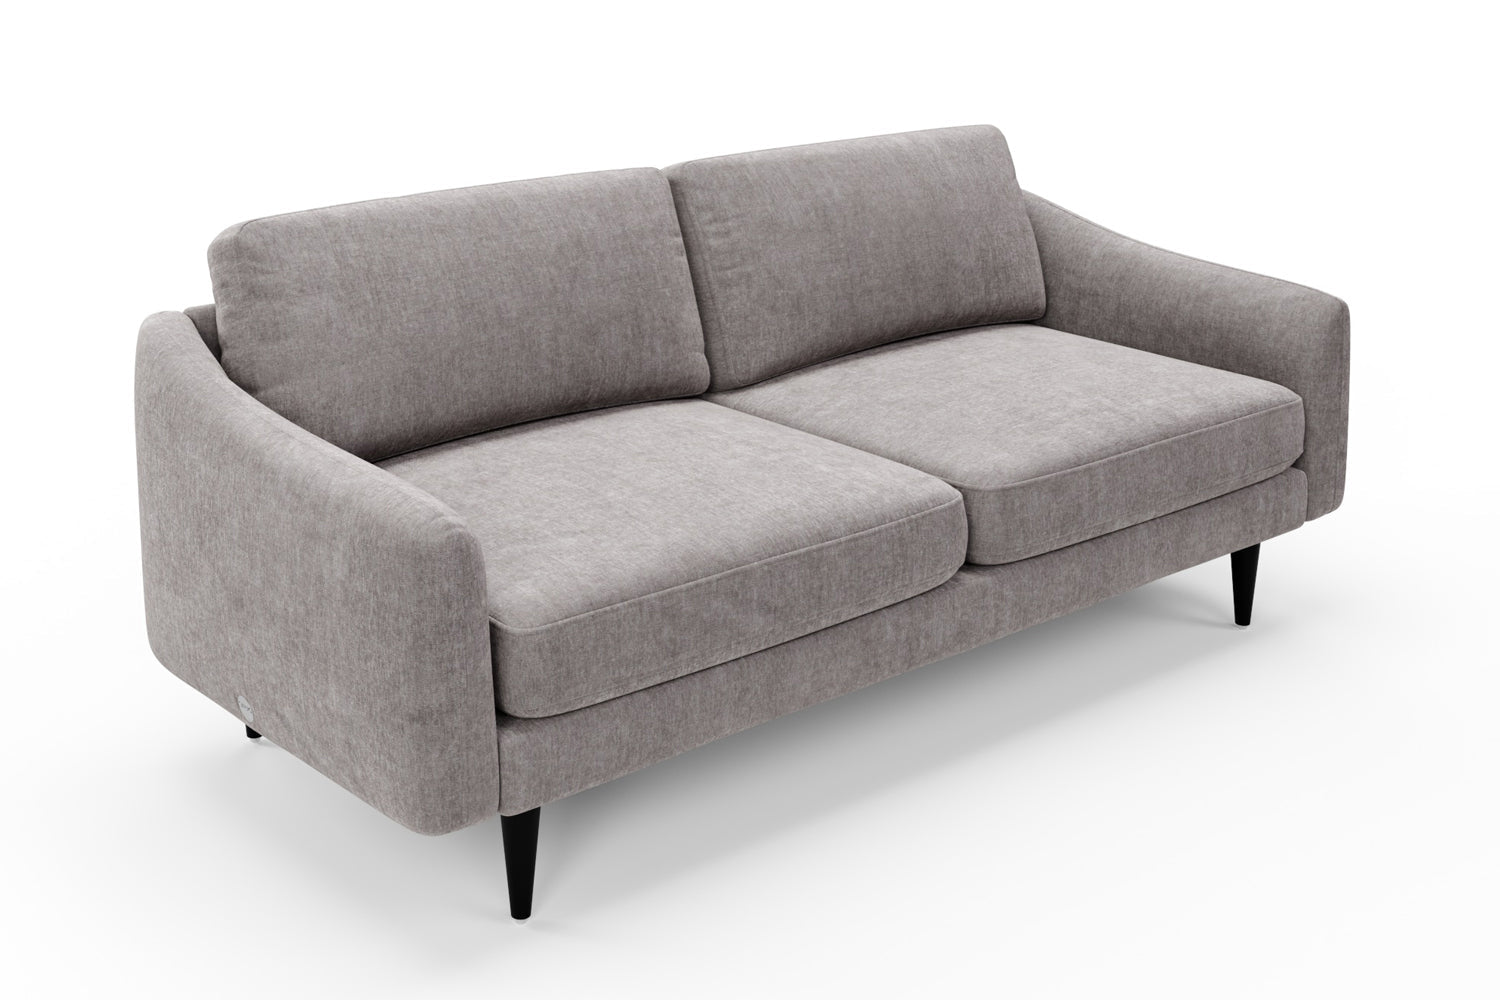 SNUG | The Rebel 3 Seater Sofa in Mid Grey